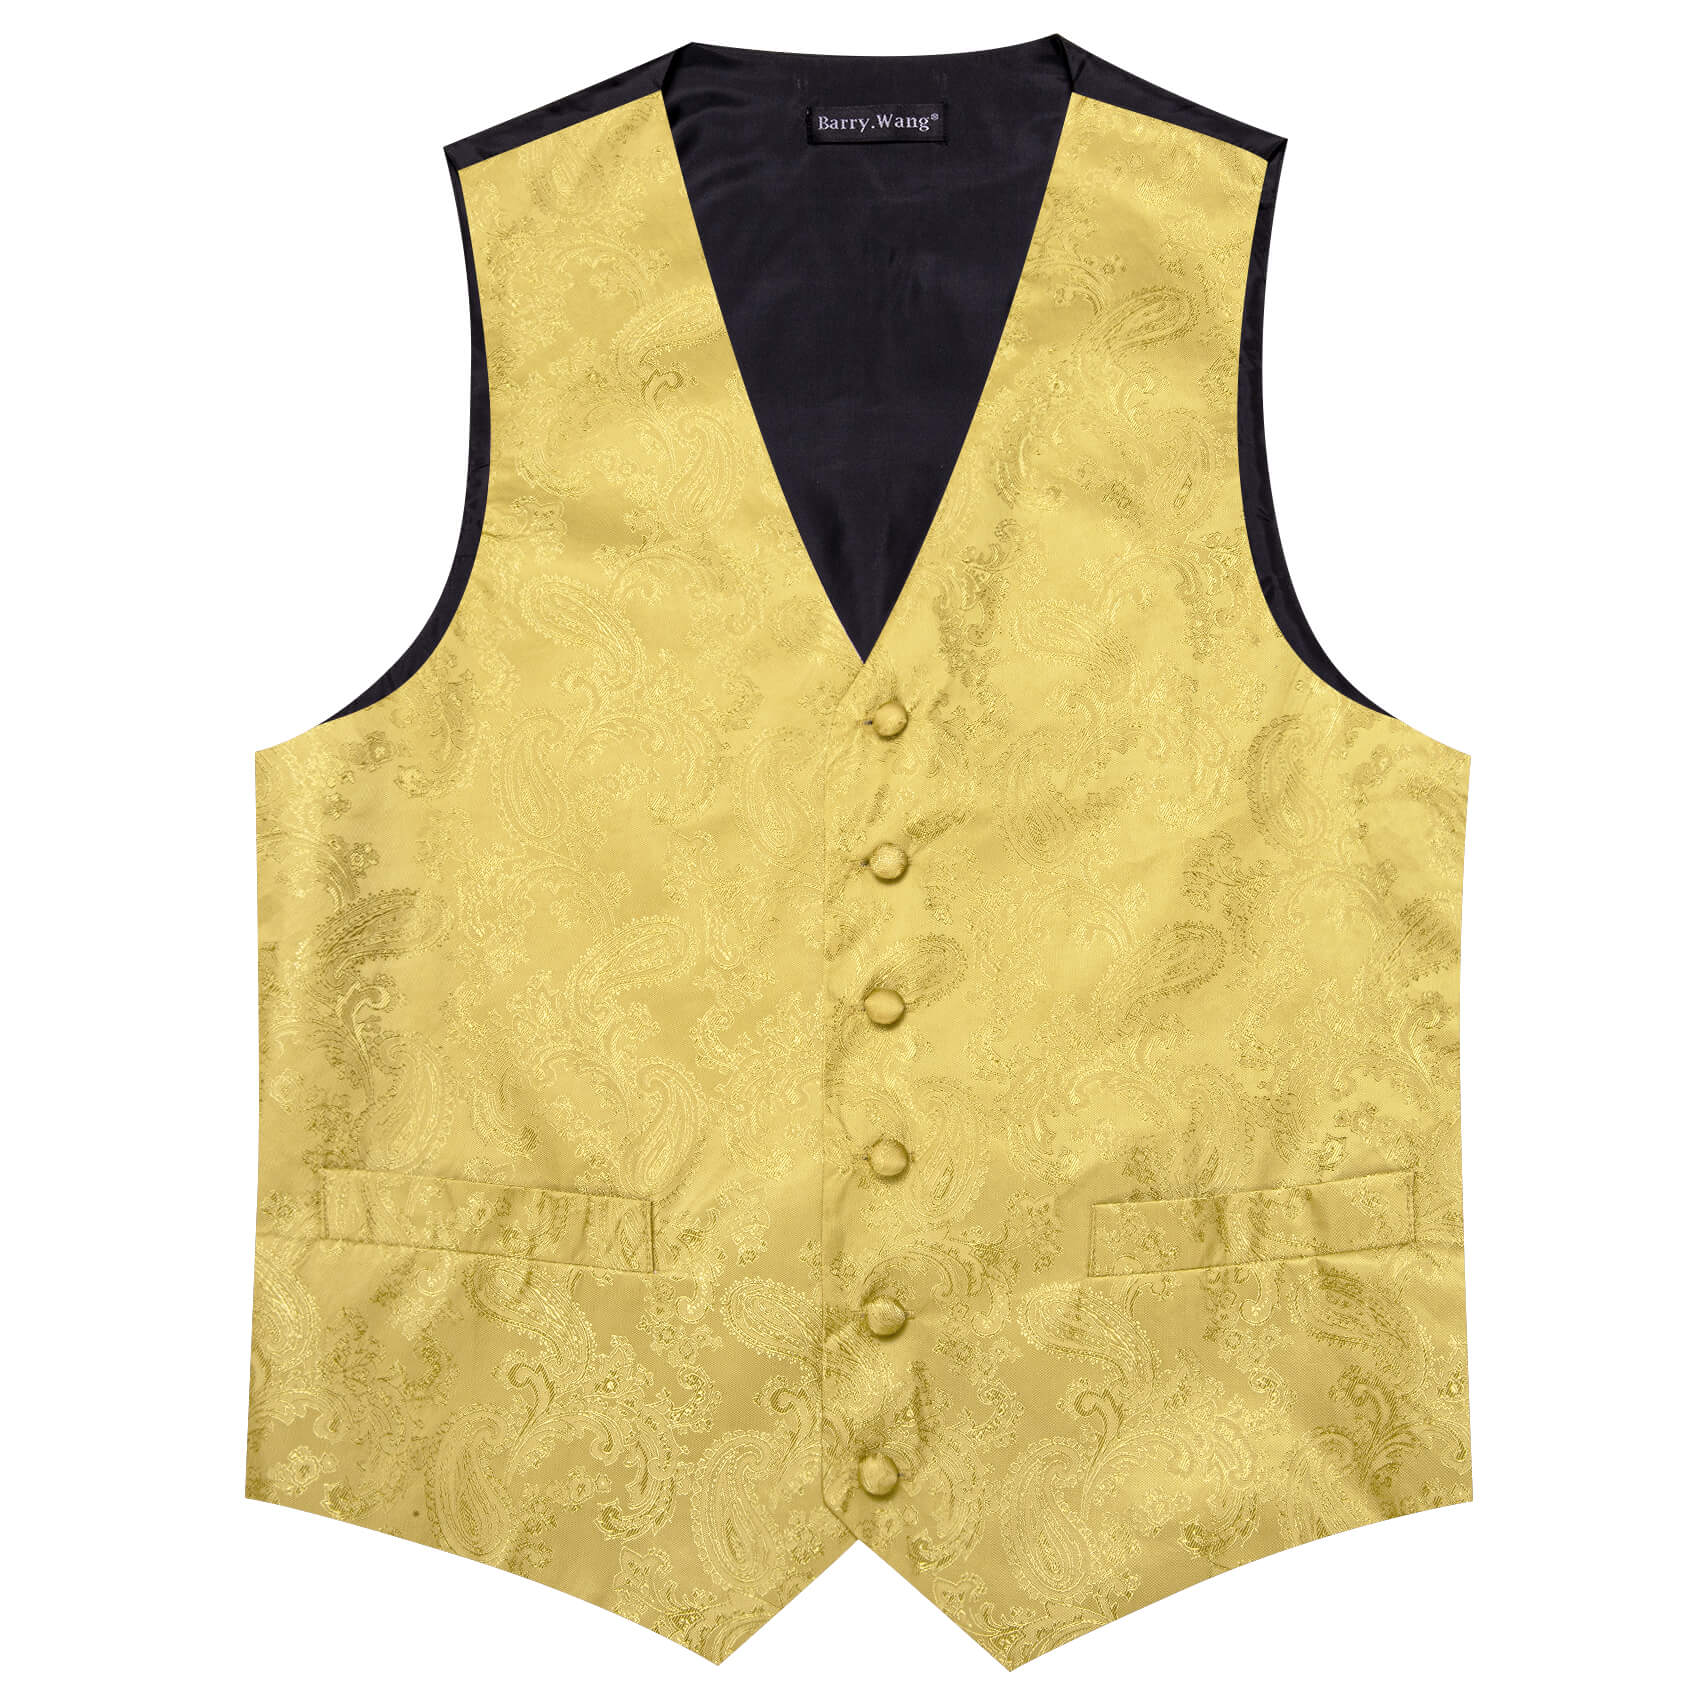 Barry Wang 5pcs Mens Waistcoat Set Sand Yellow Paisley Vest